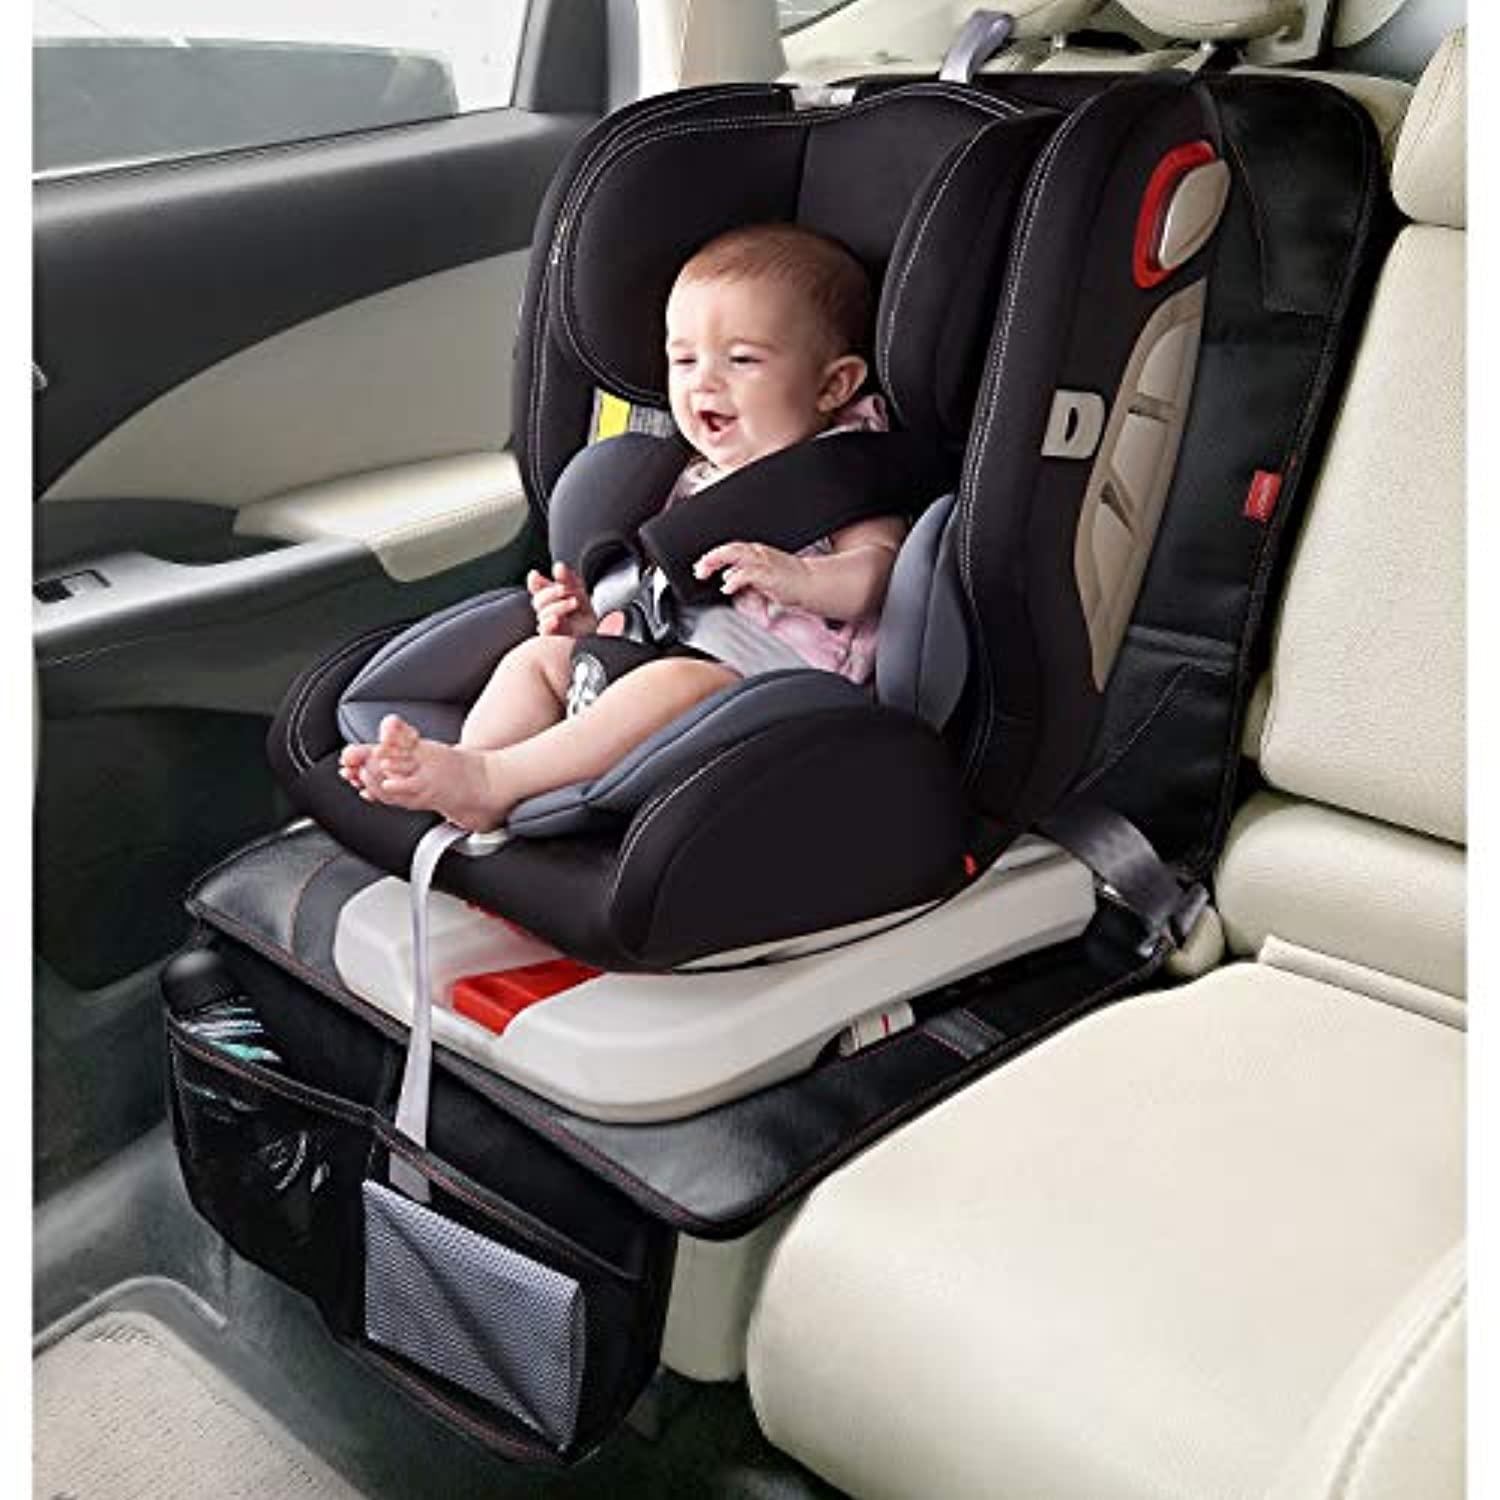 Lescars Sitzschutz Kindersitz: 2er-Set Premium-Kindersitz-Unterlage, 2  Netztaschen, Isofix-geeignet (Sitzschutz Auto Kindersitz)